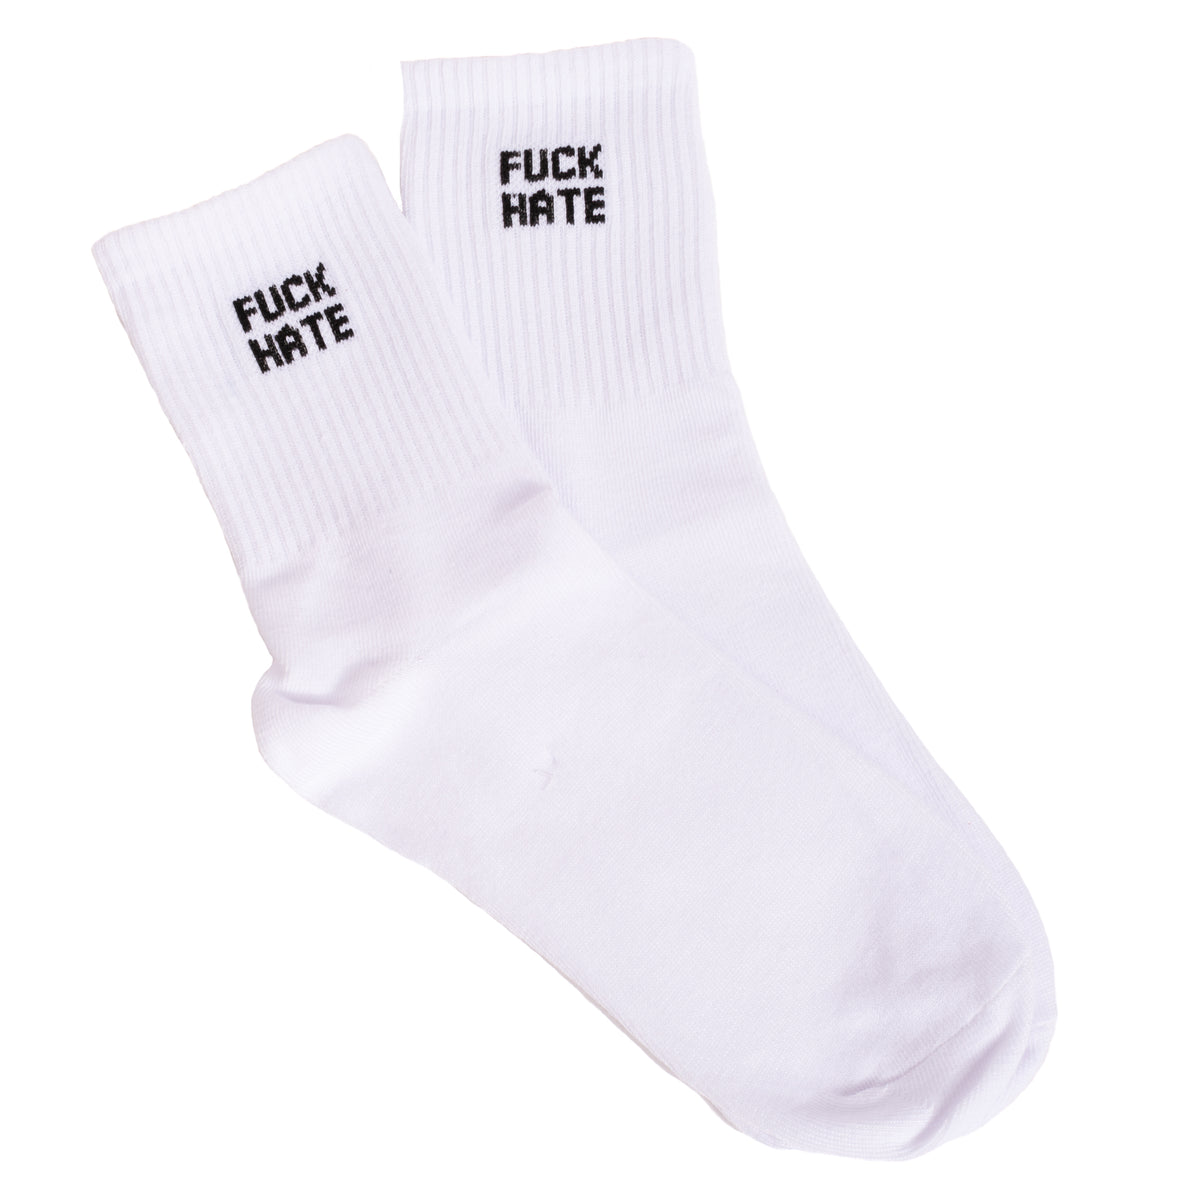 SLPT: Buy a pair of fuck socks : r/ShittyLifeProTips